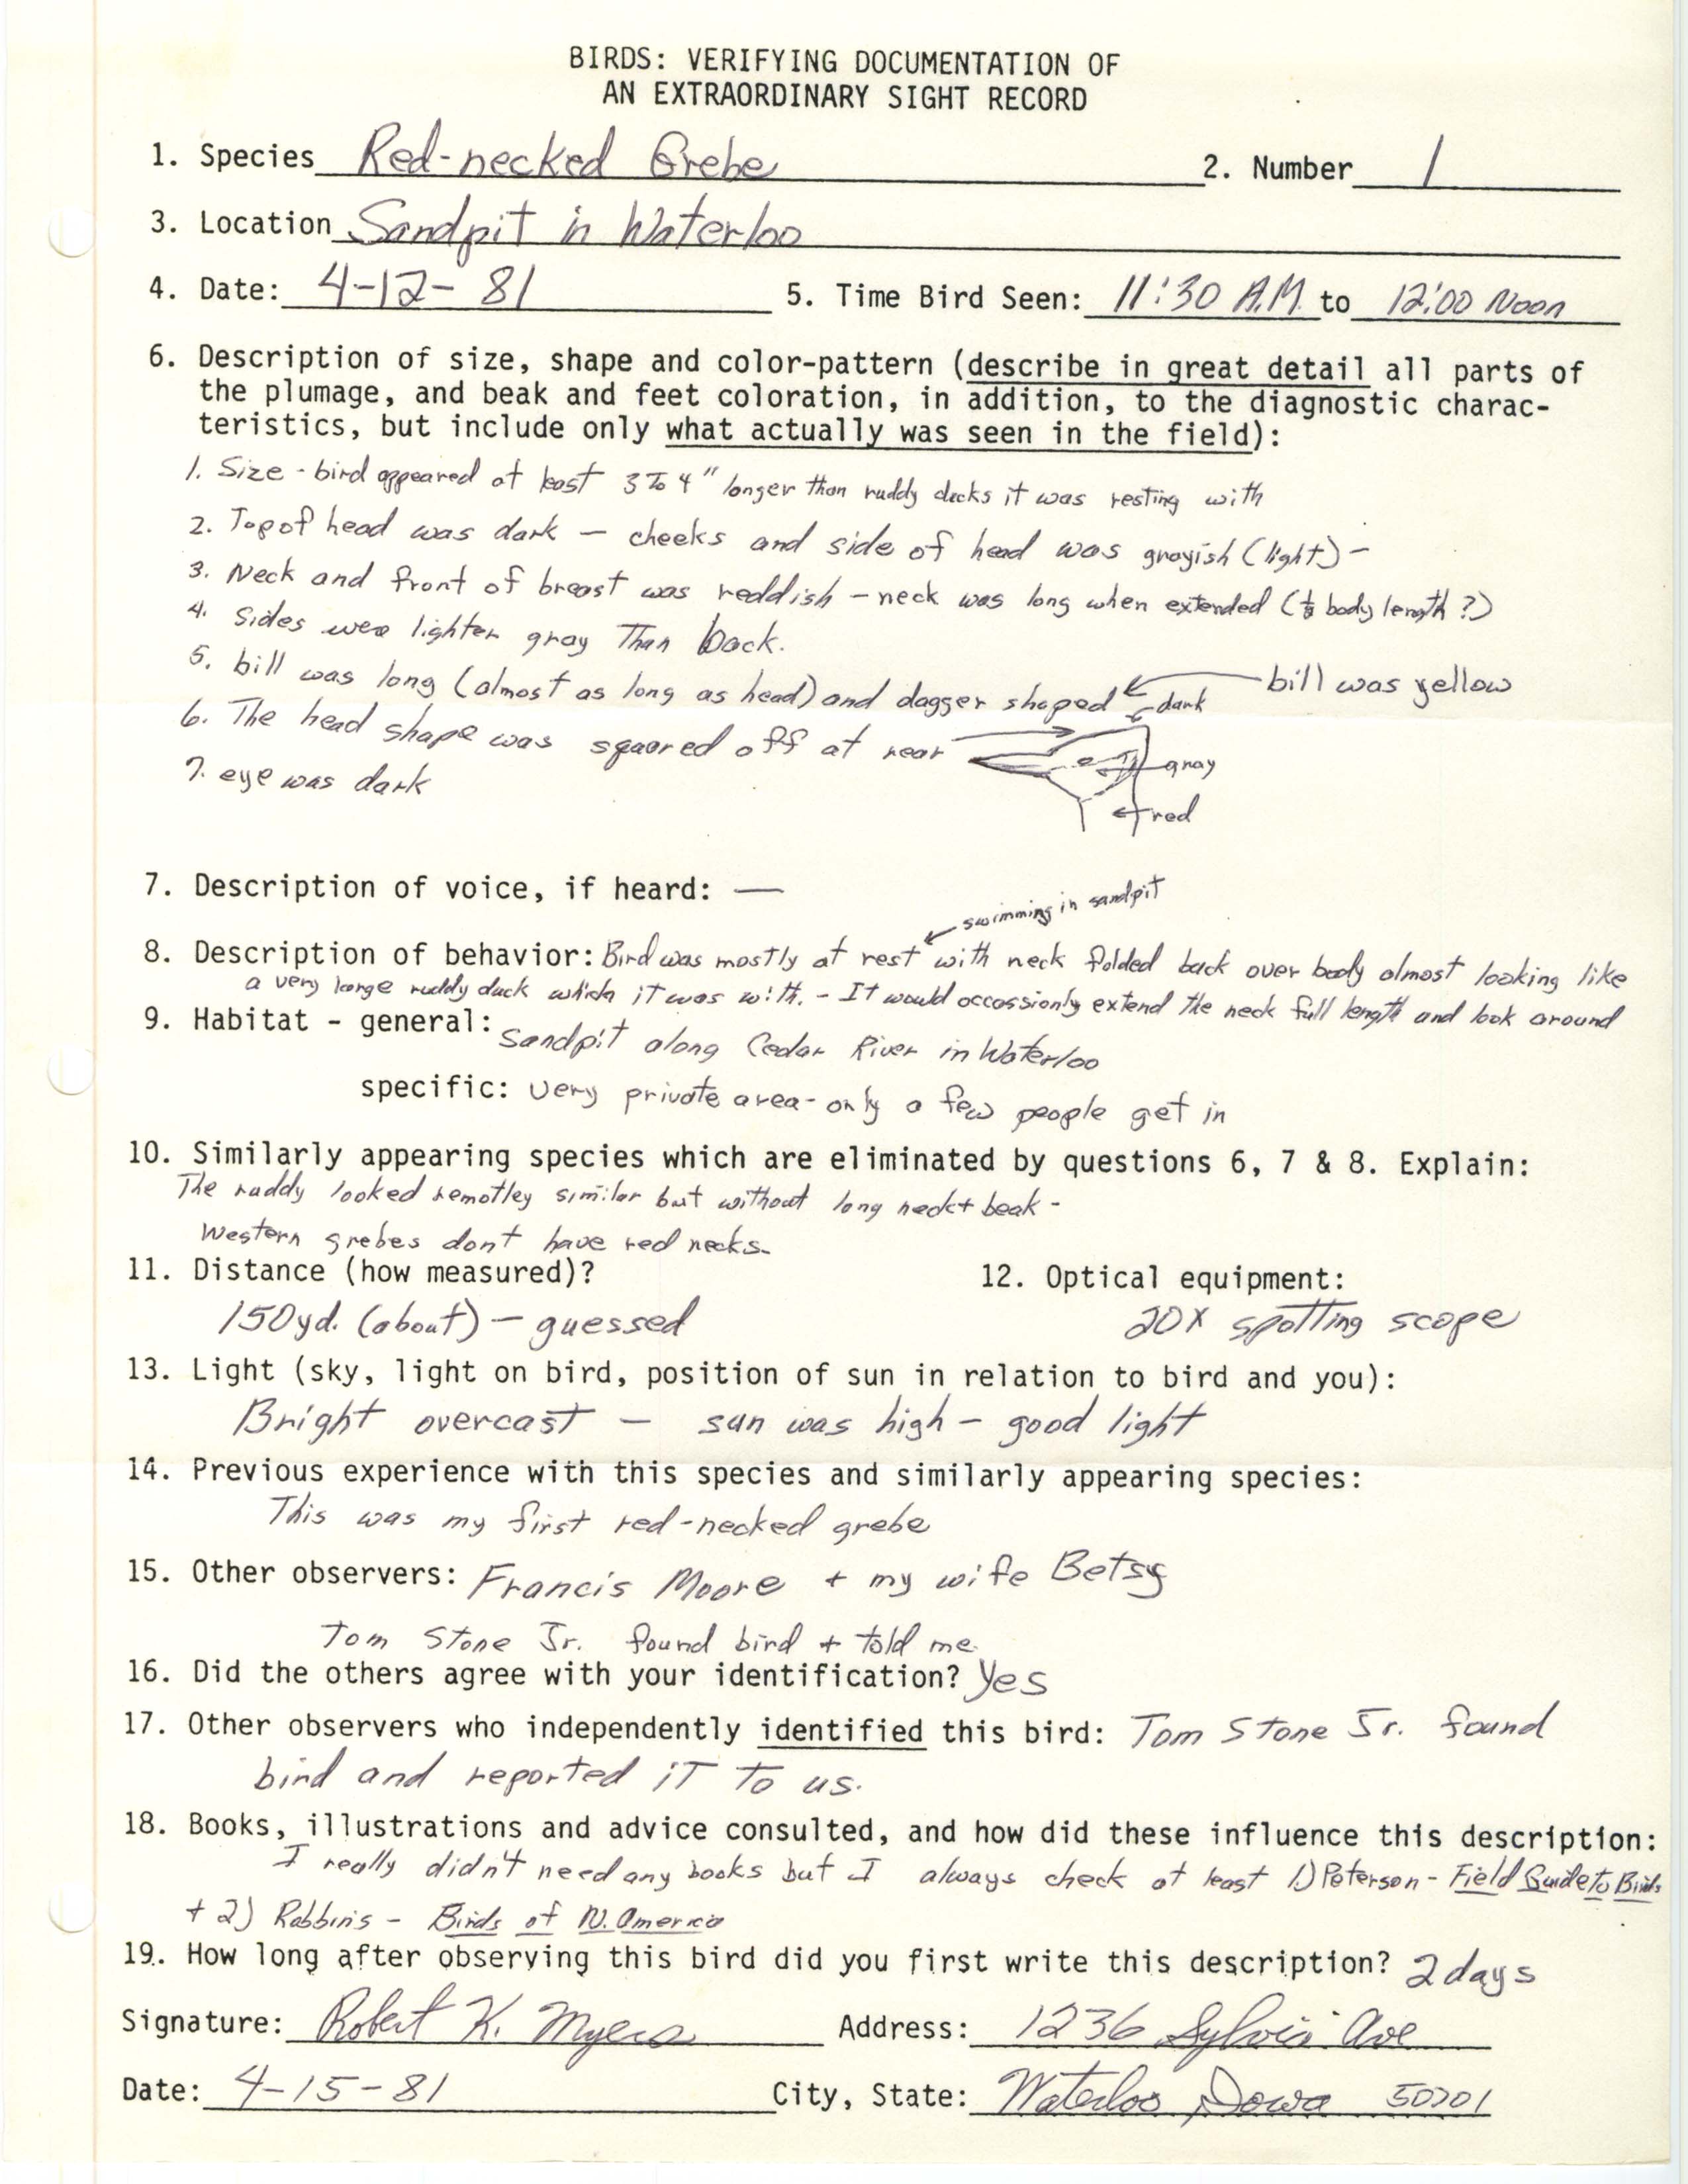 Rare bird documentation form for Red-necked Grebe, April 15,1981